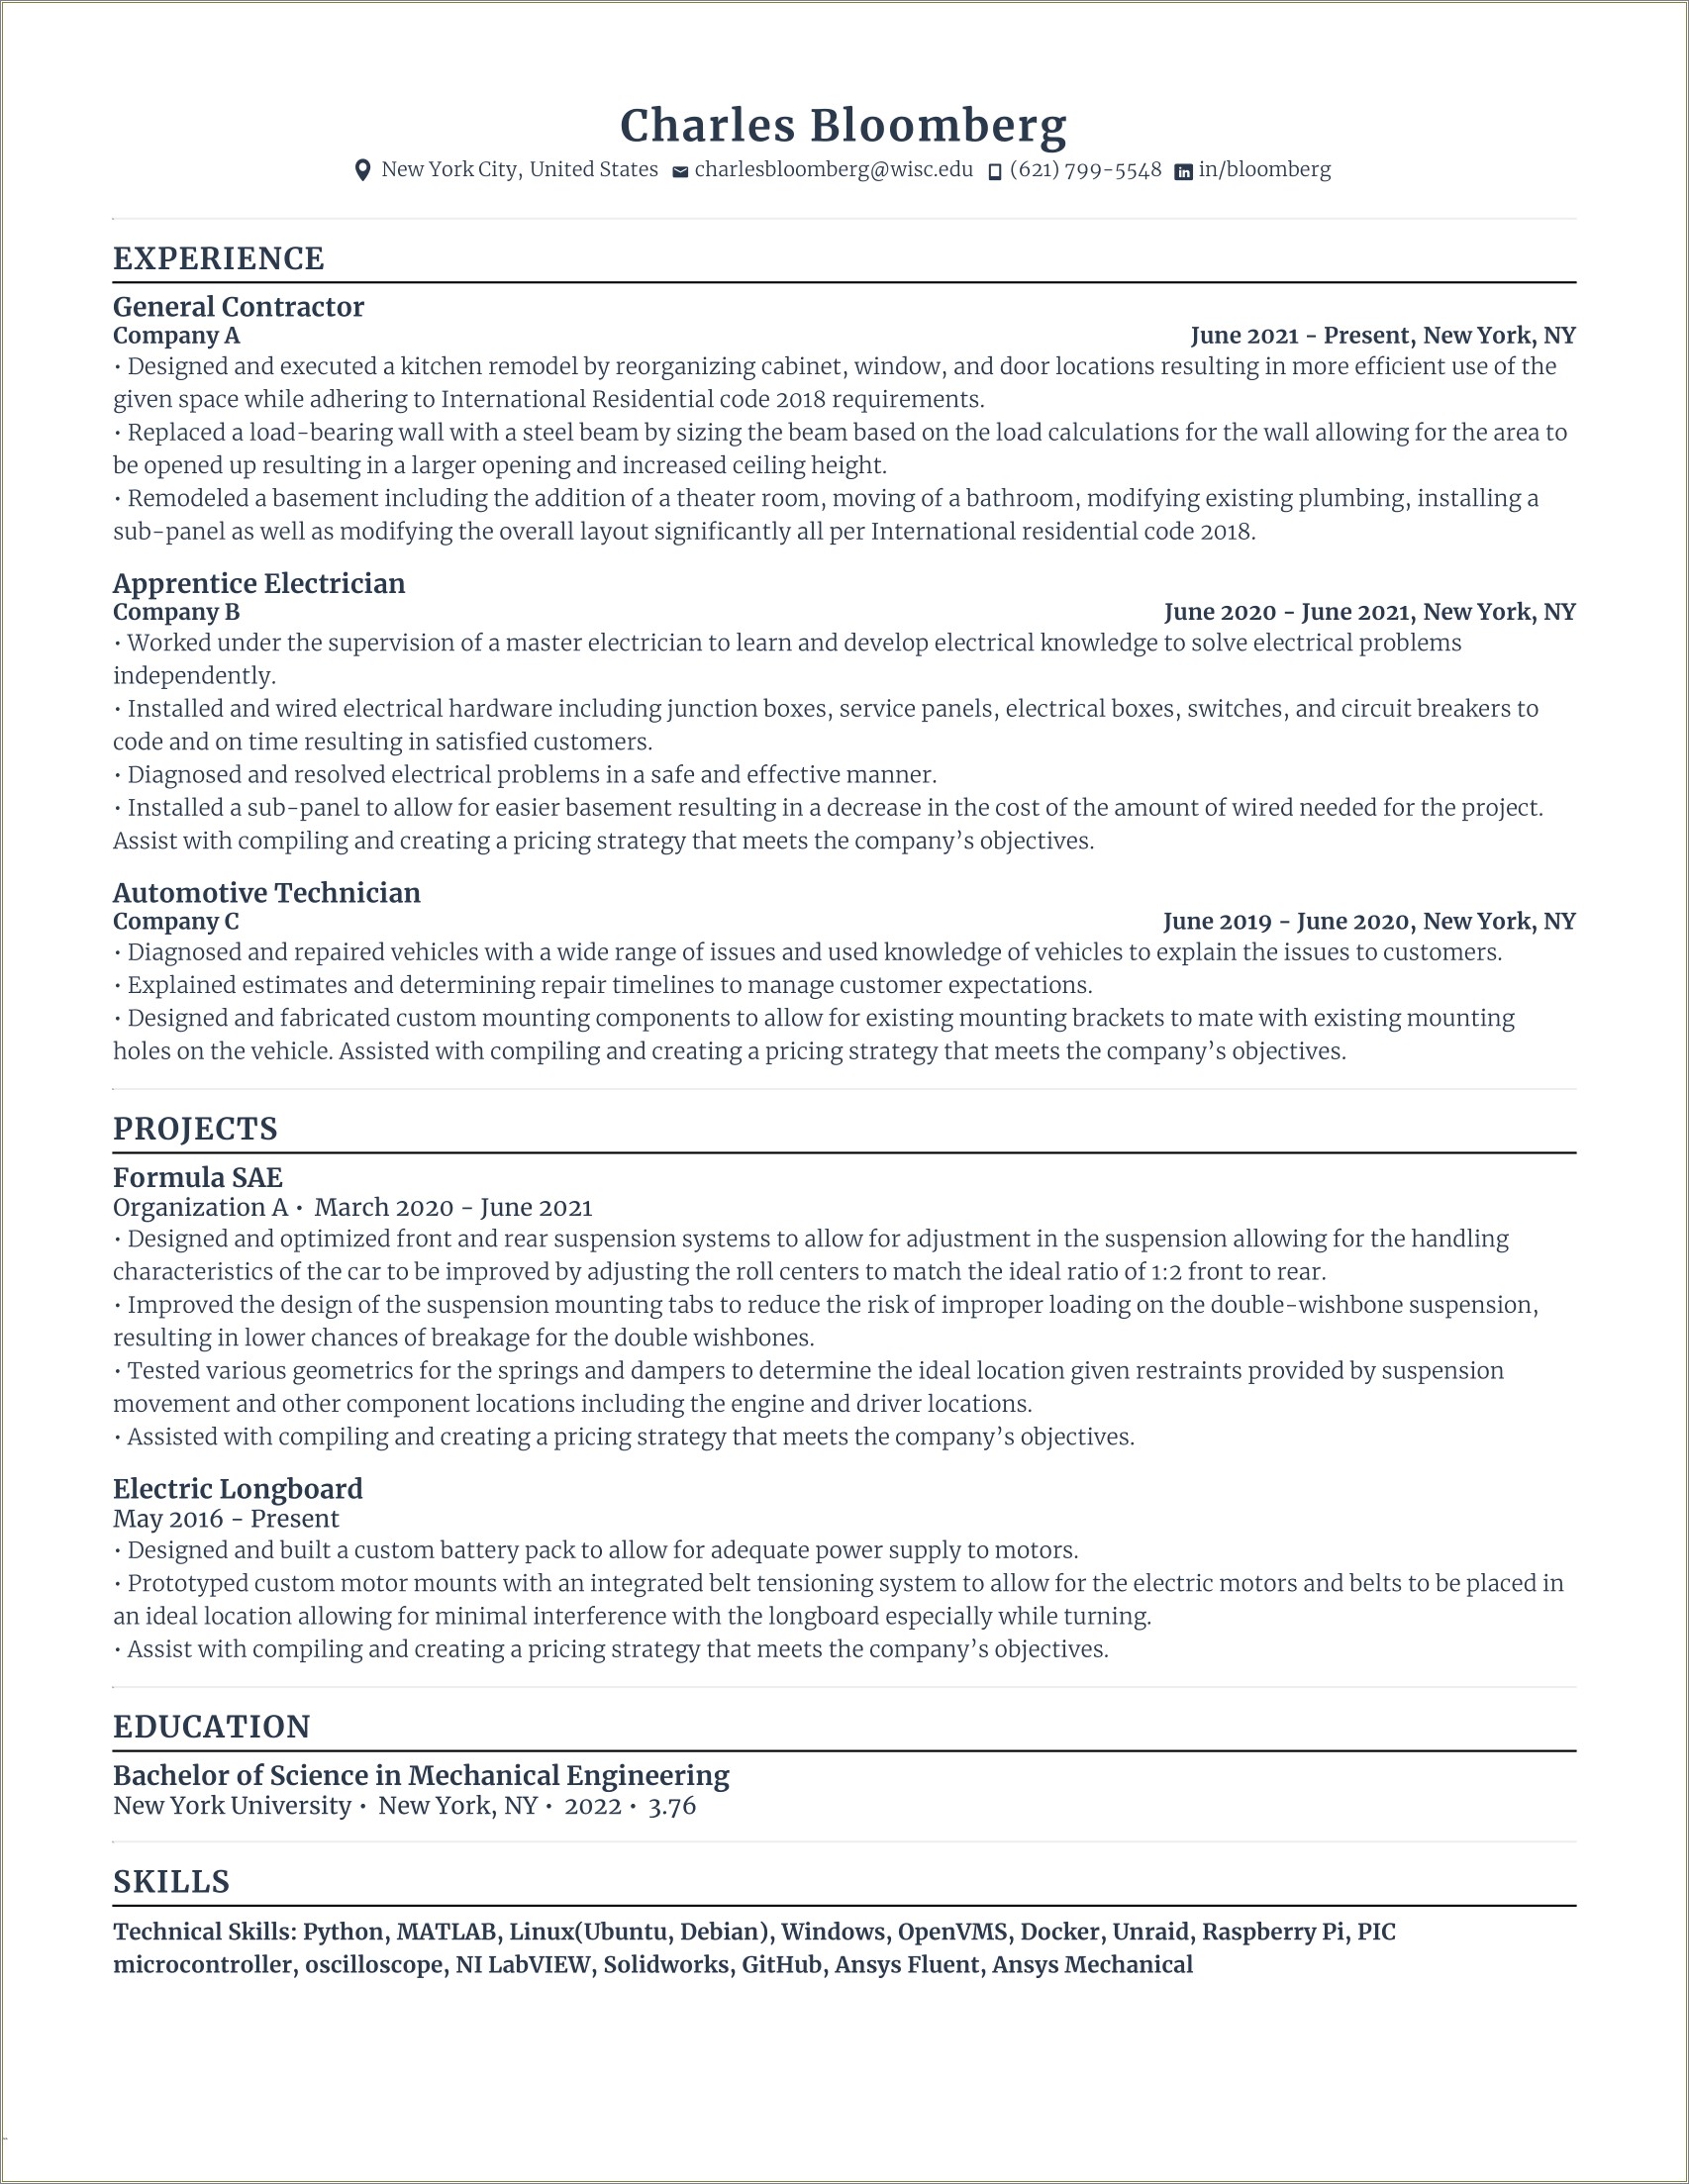 Sample Resume Format For Mep Engineer